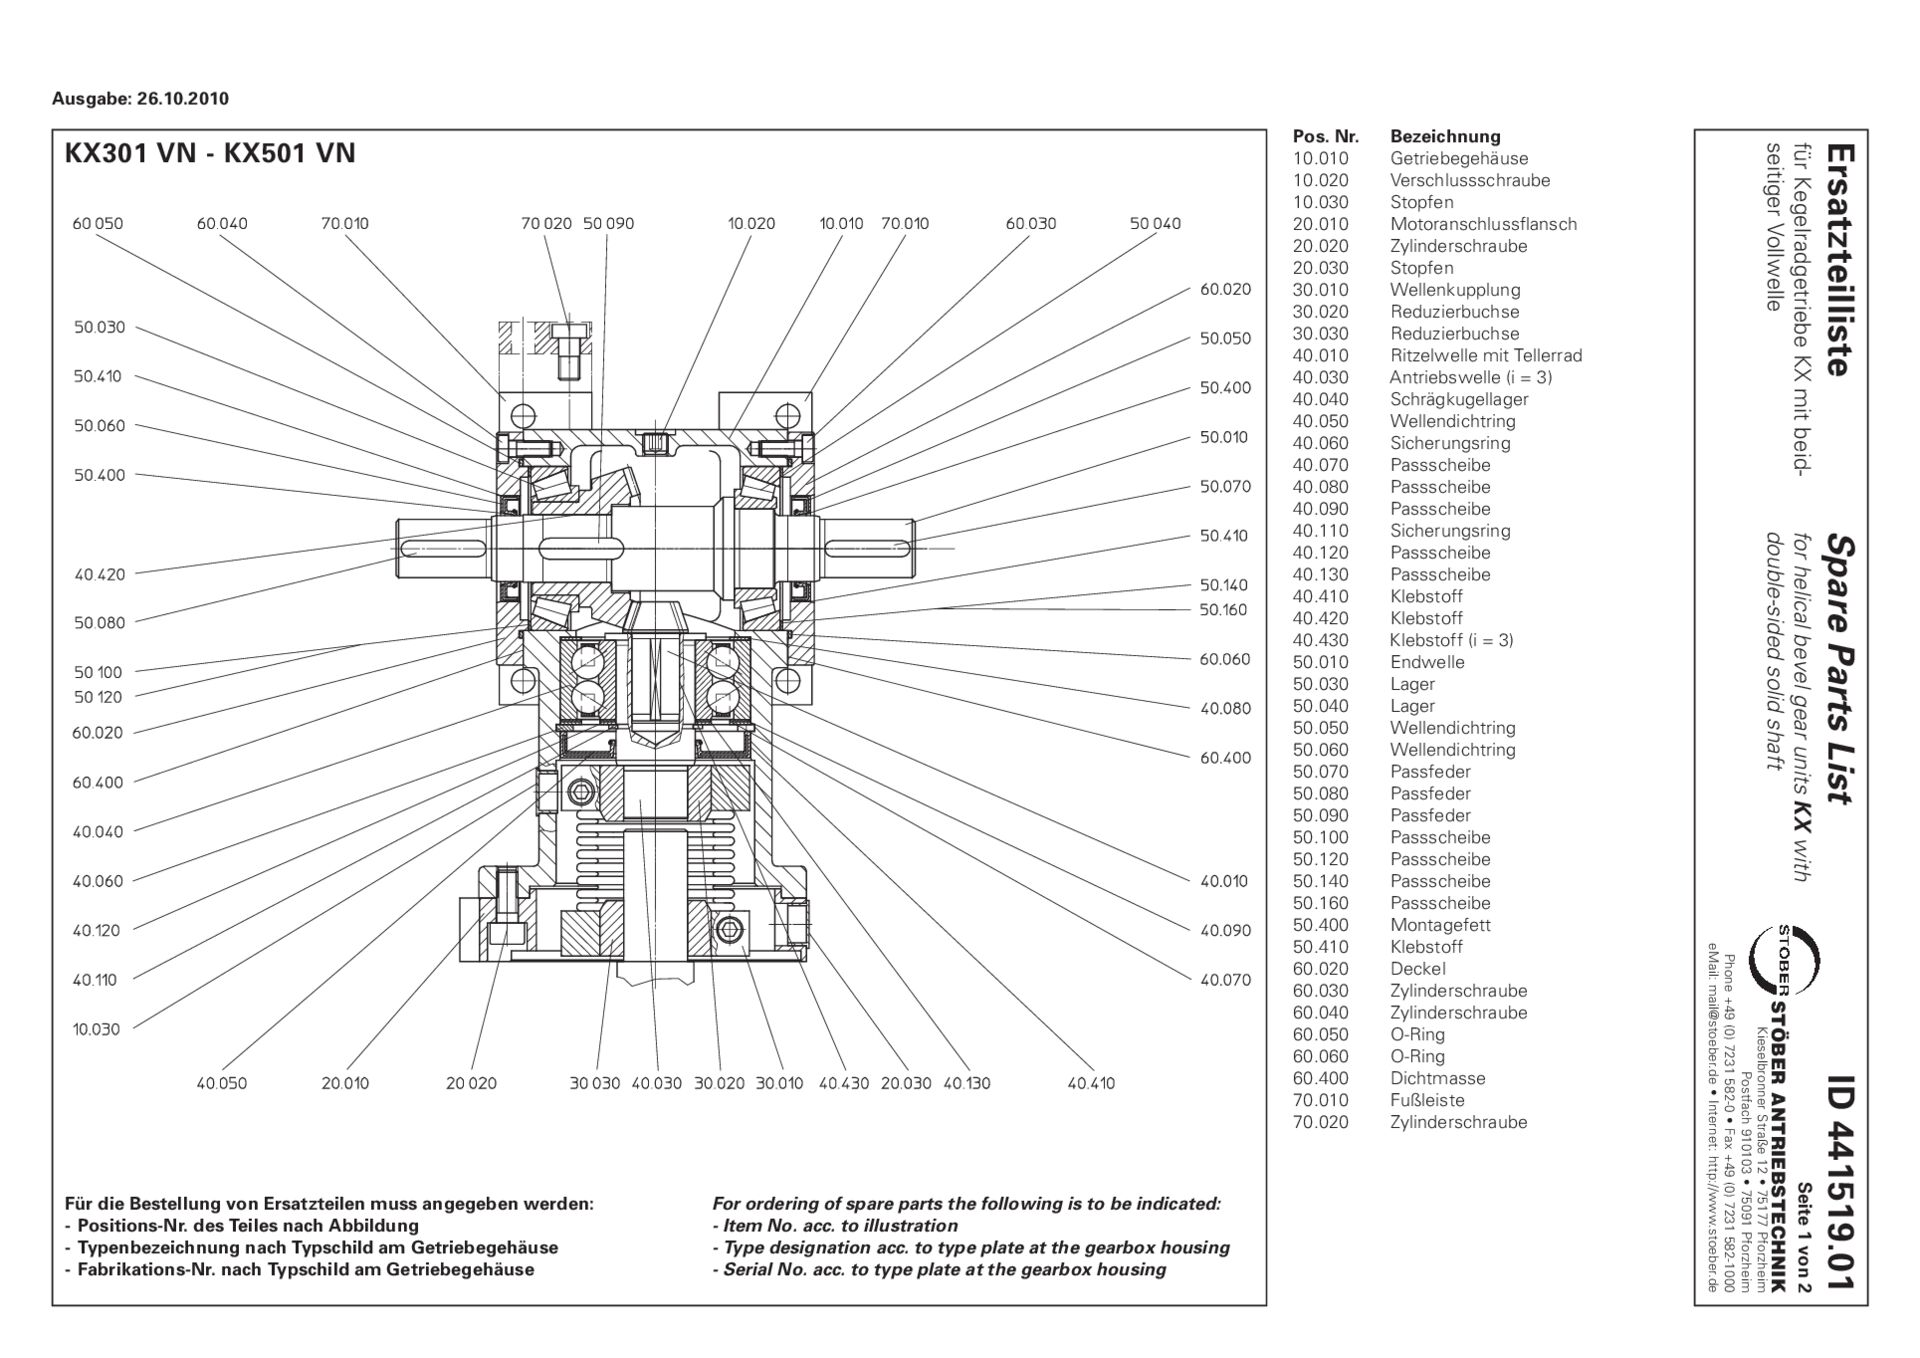 Replacement parts list helical bevel gear units KX401 KX501 VNF